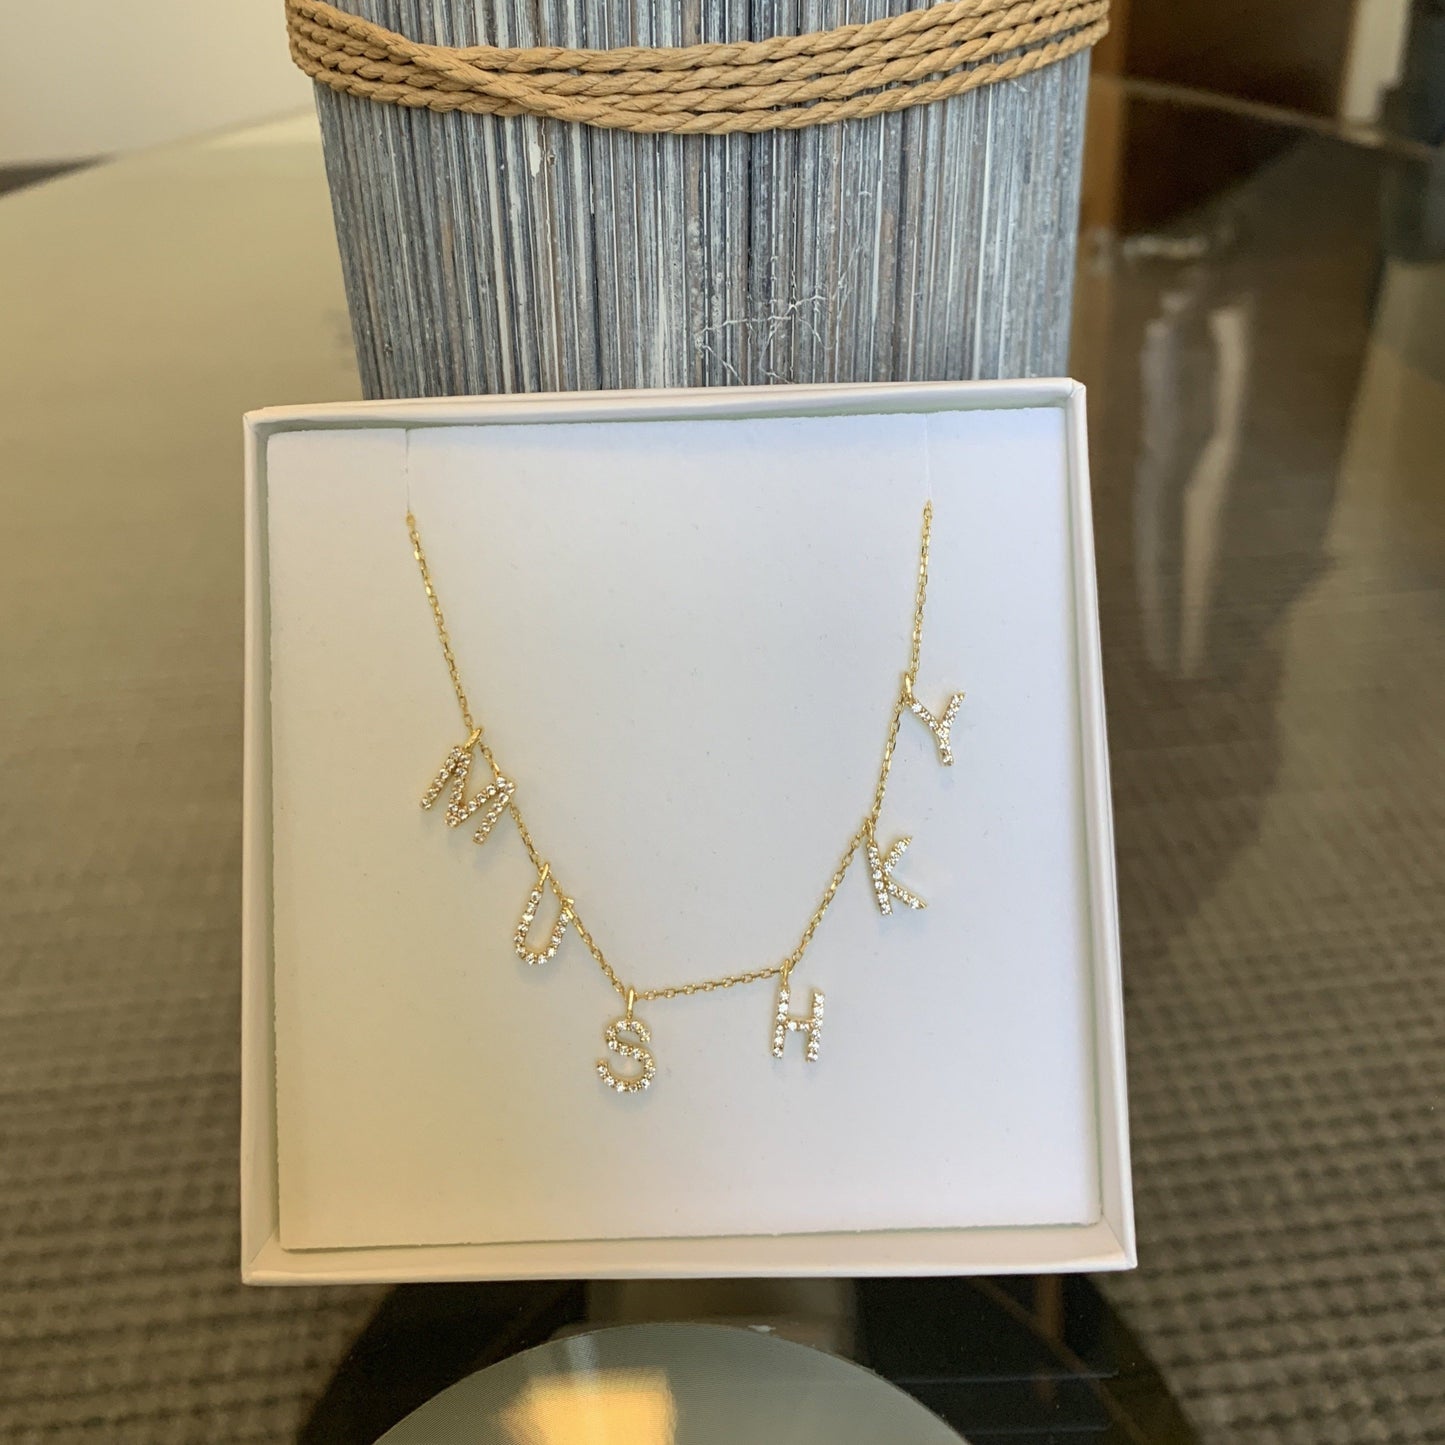 Jordyn Customized Floating CZ Name Necklace - Retail Therapy Jewelry